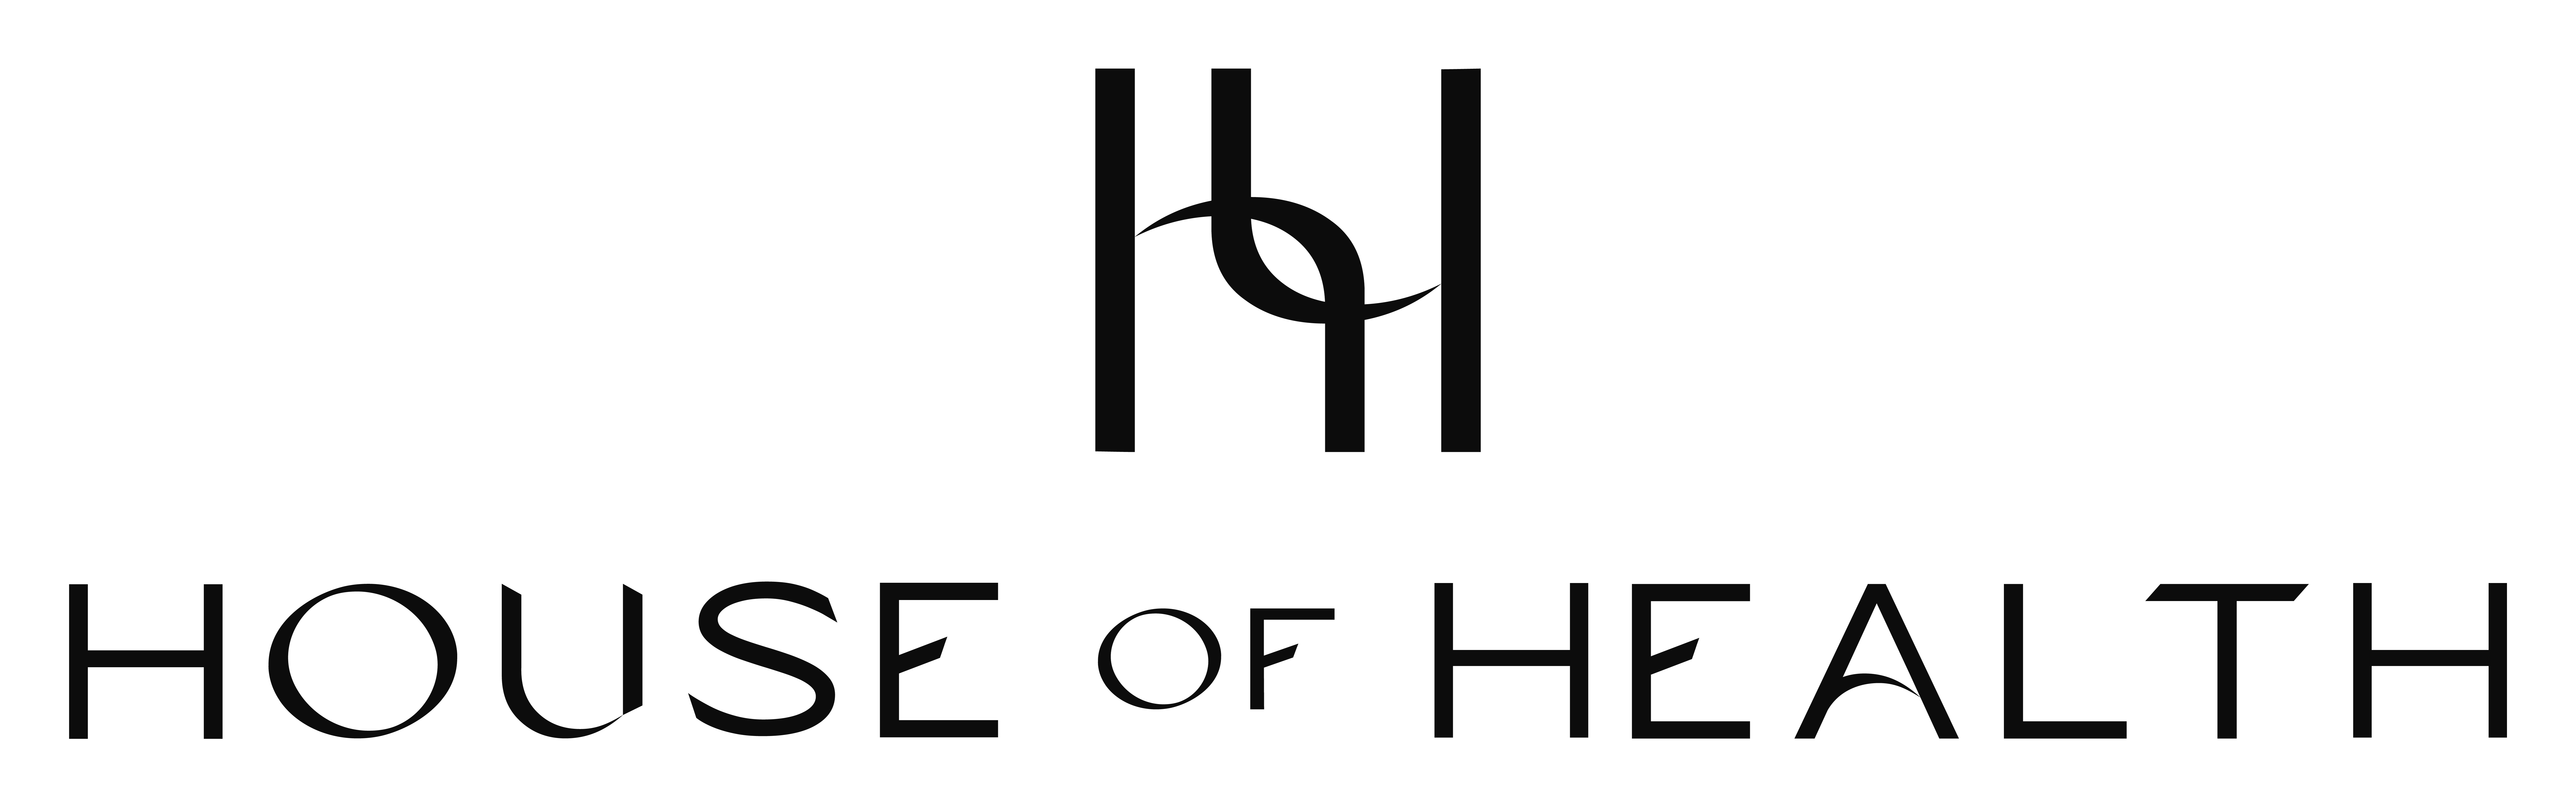 House of Health